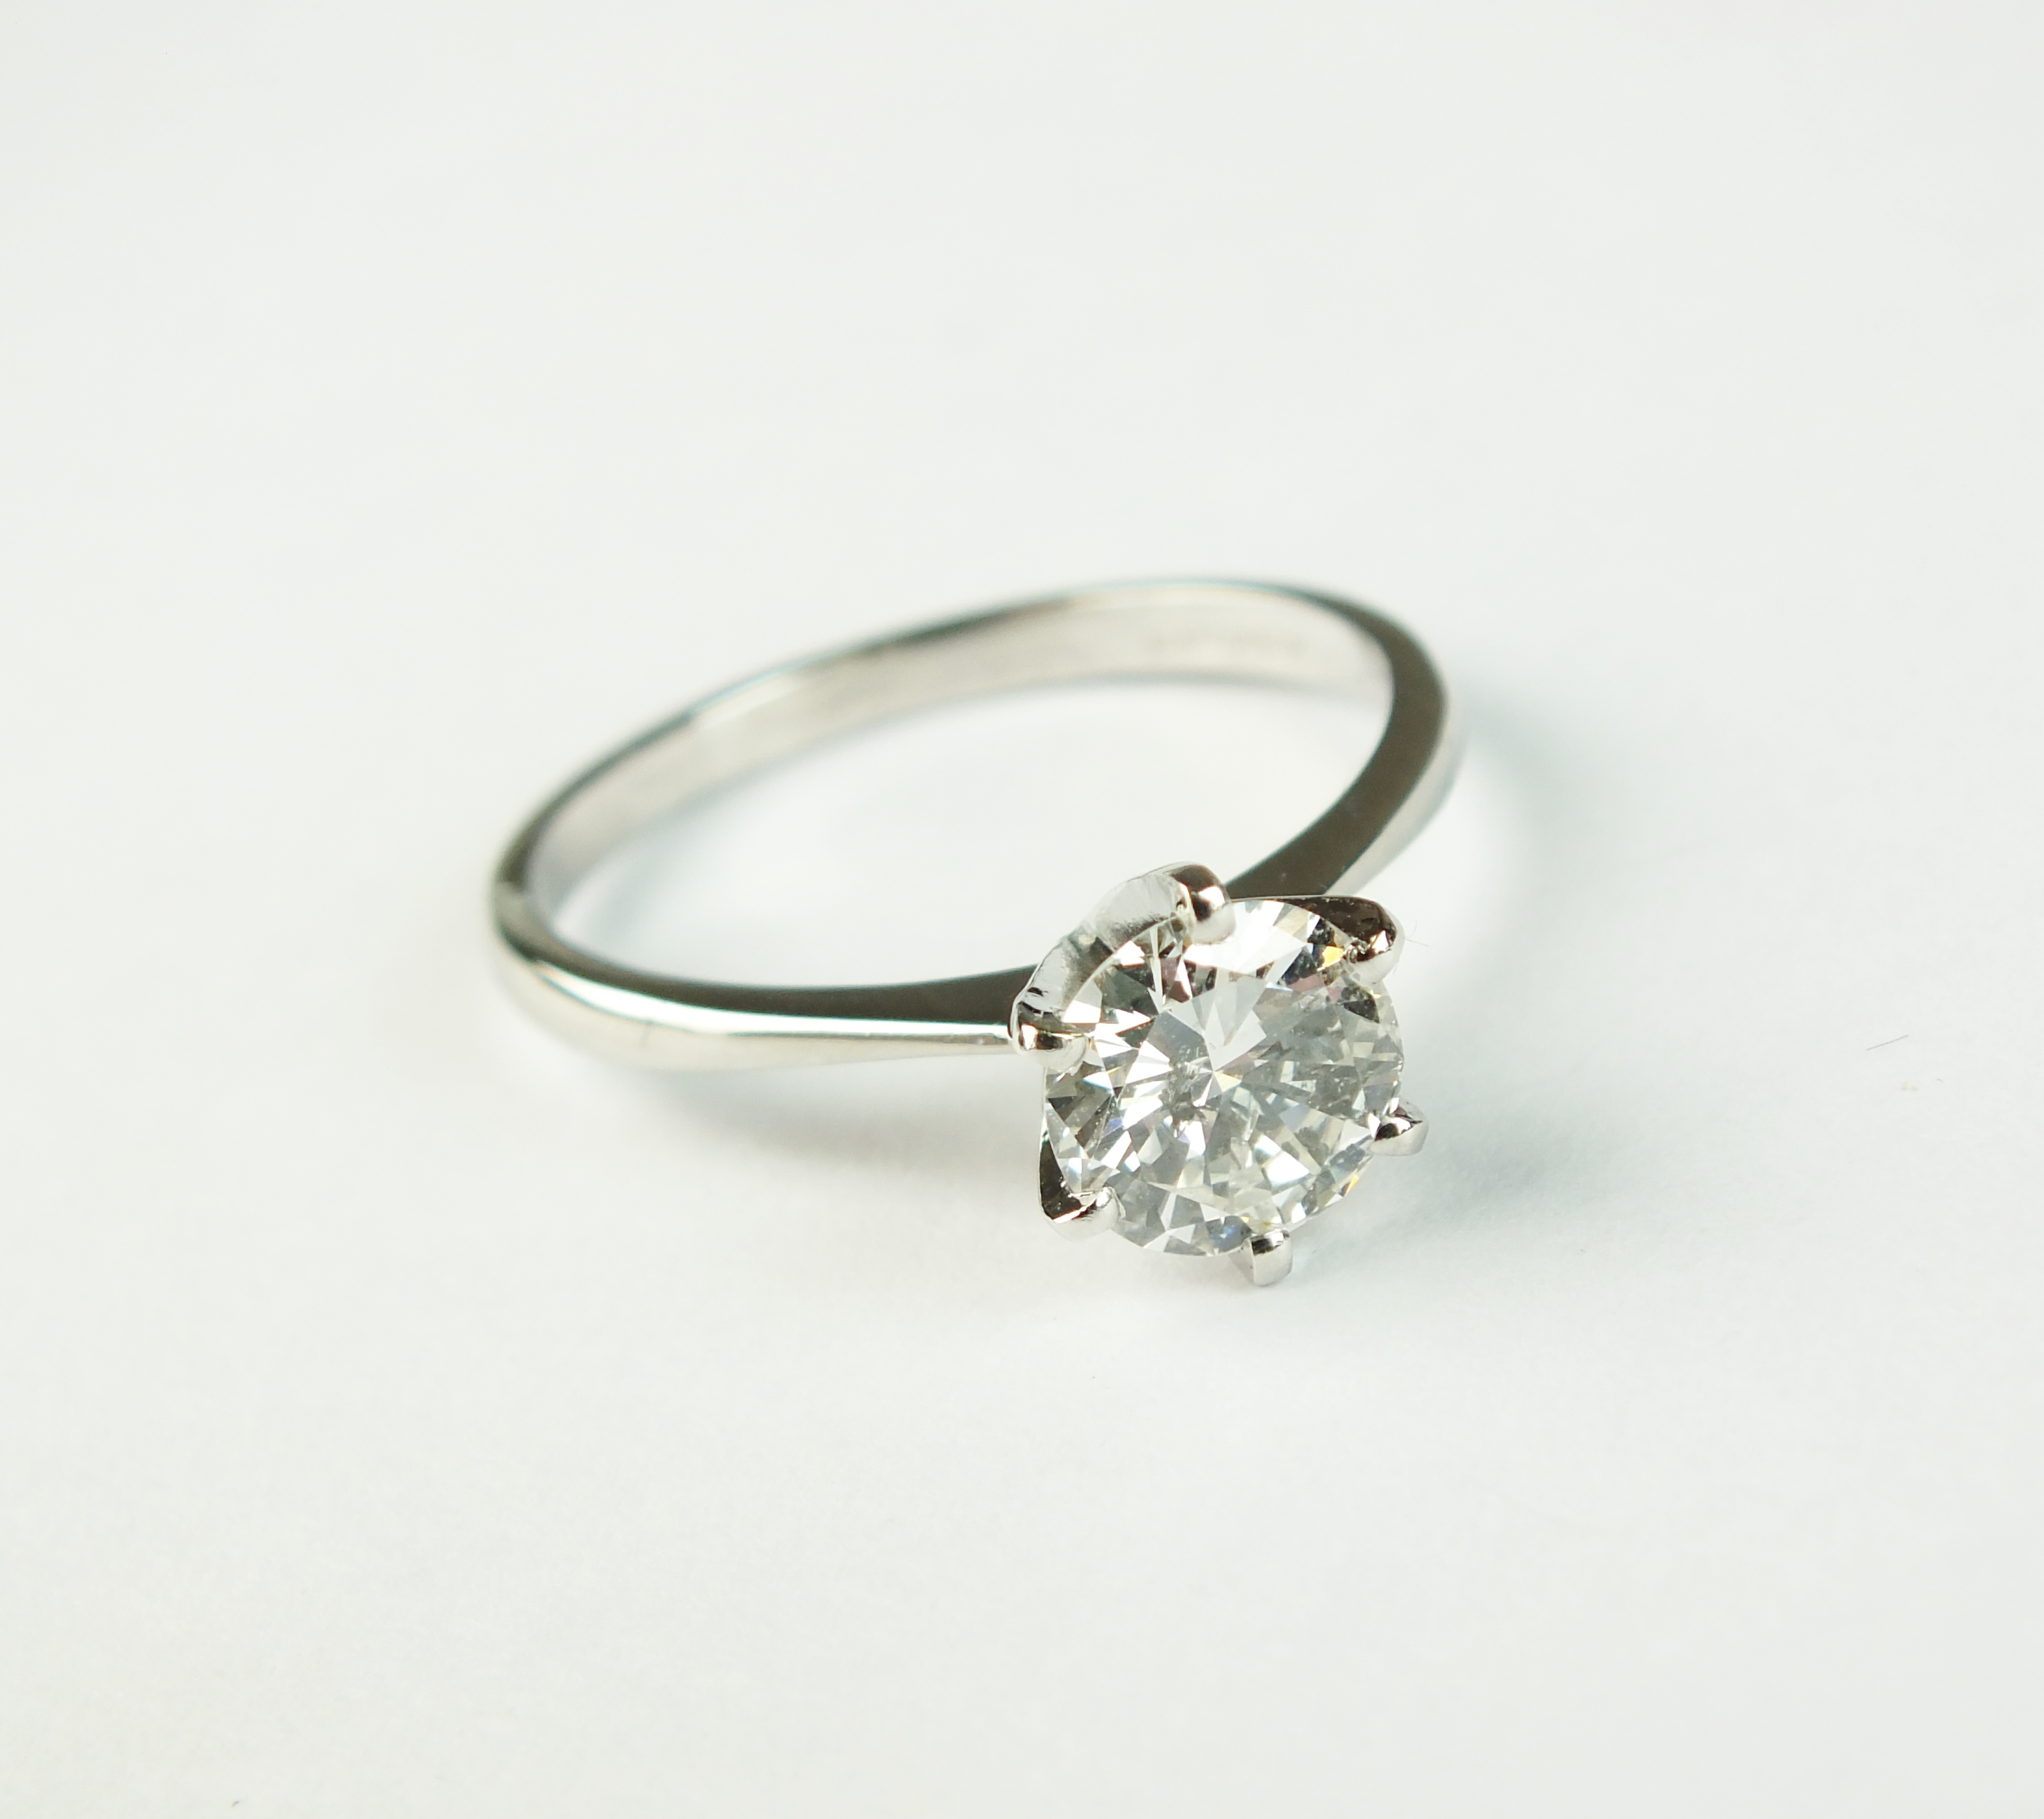 An 18ct white gold single stone diamond ring